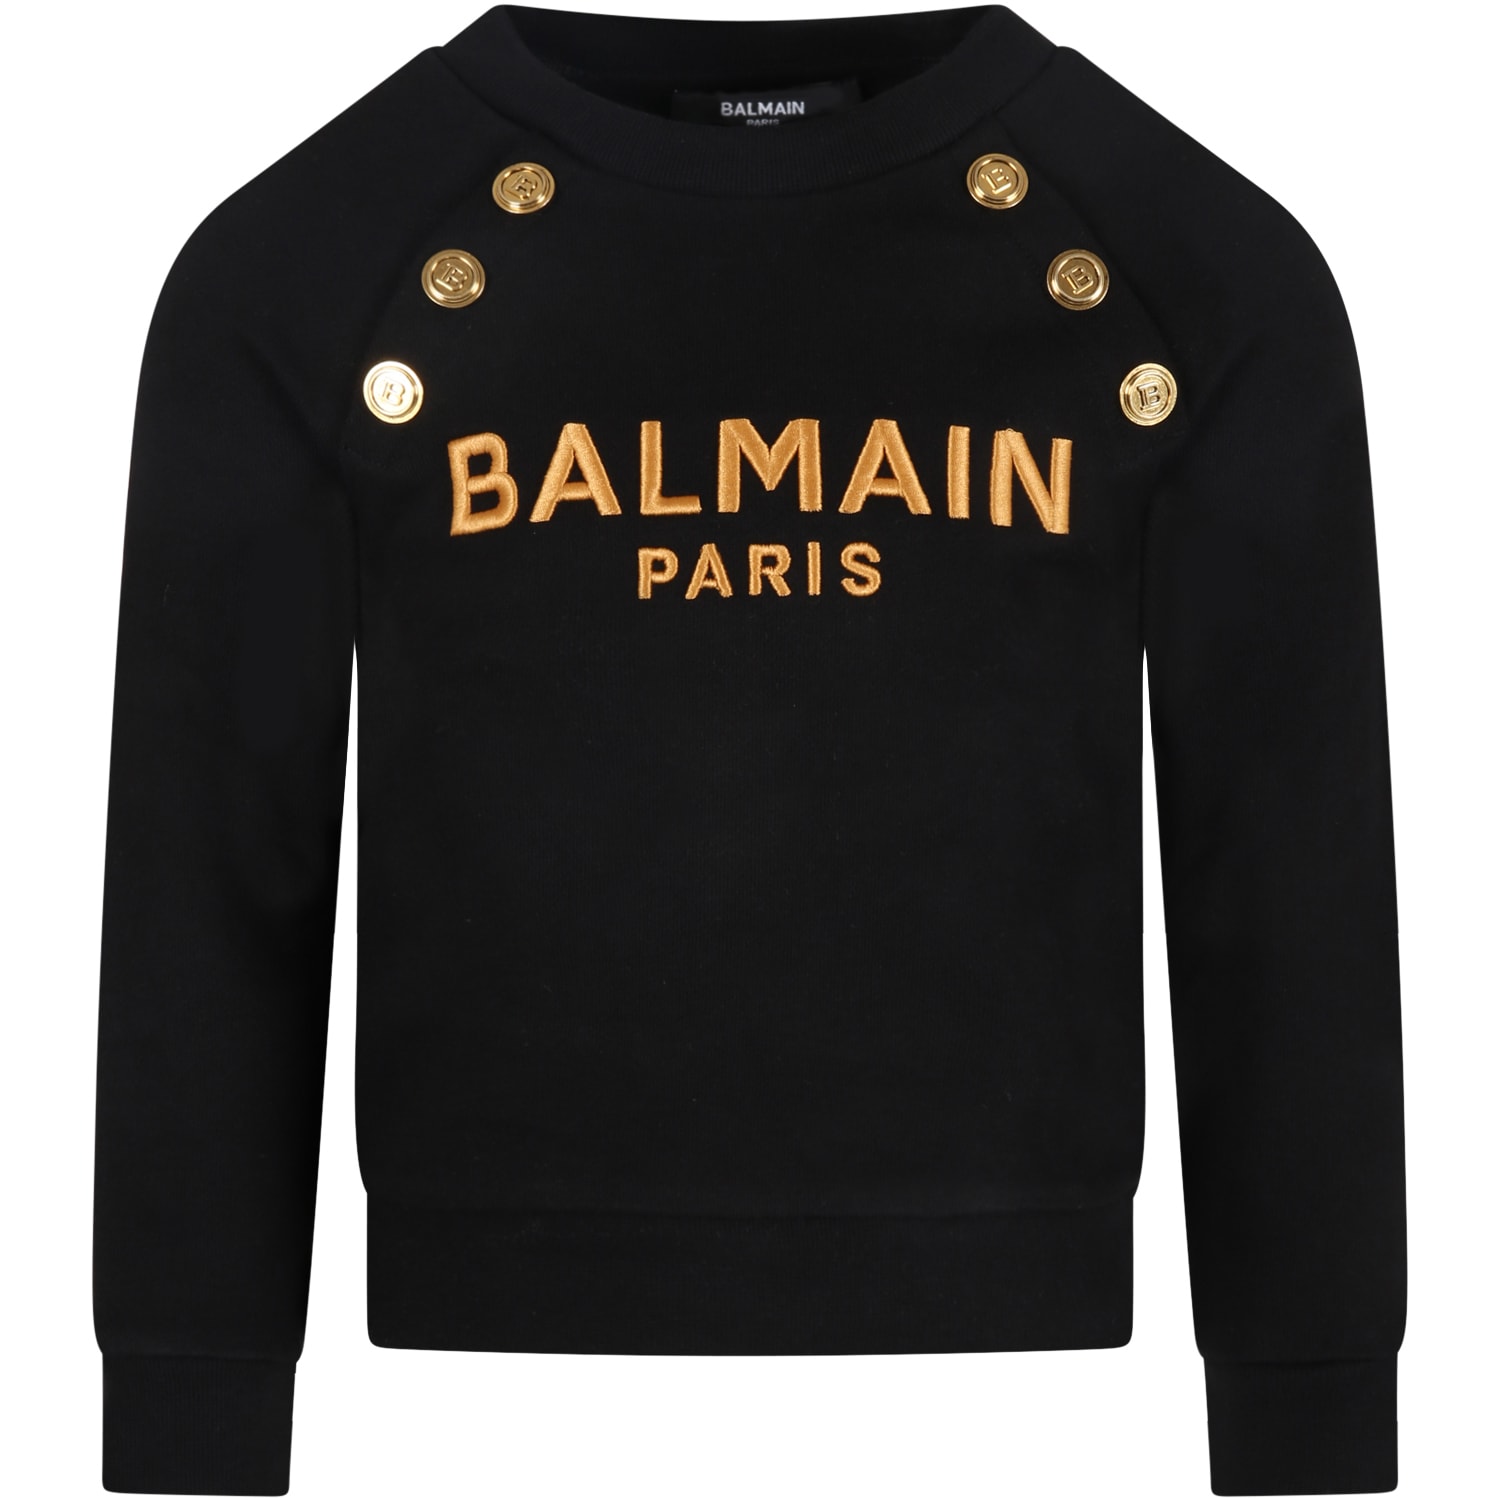 Balmain Black Sweatshirt For Kids With Gold Logo